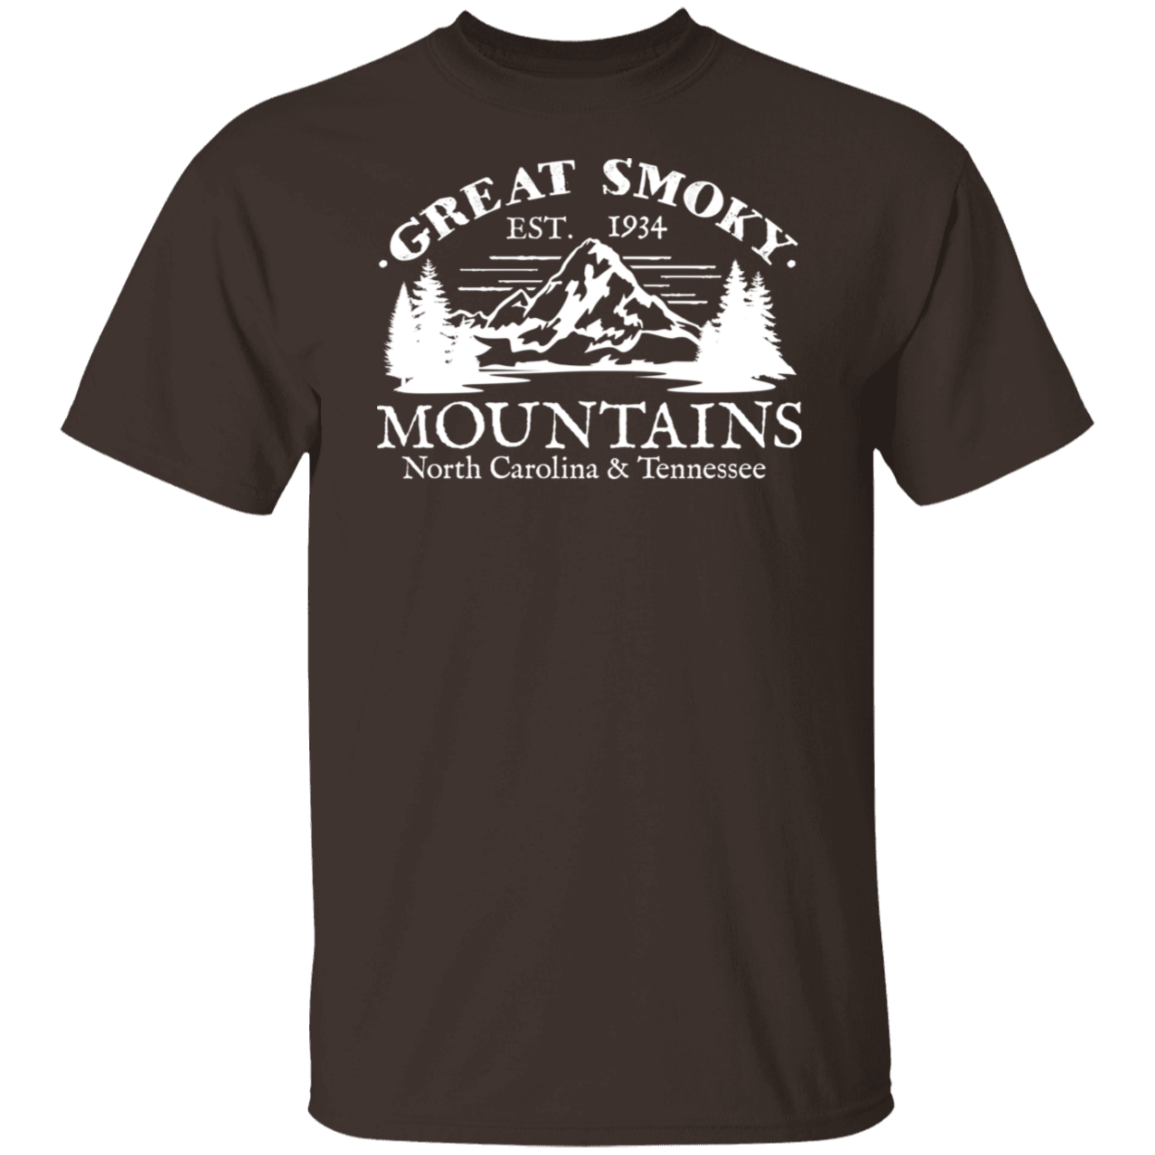 Great Smoky Mountains Vintage White Print T-Shirt